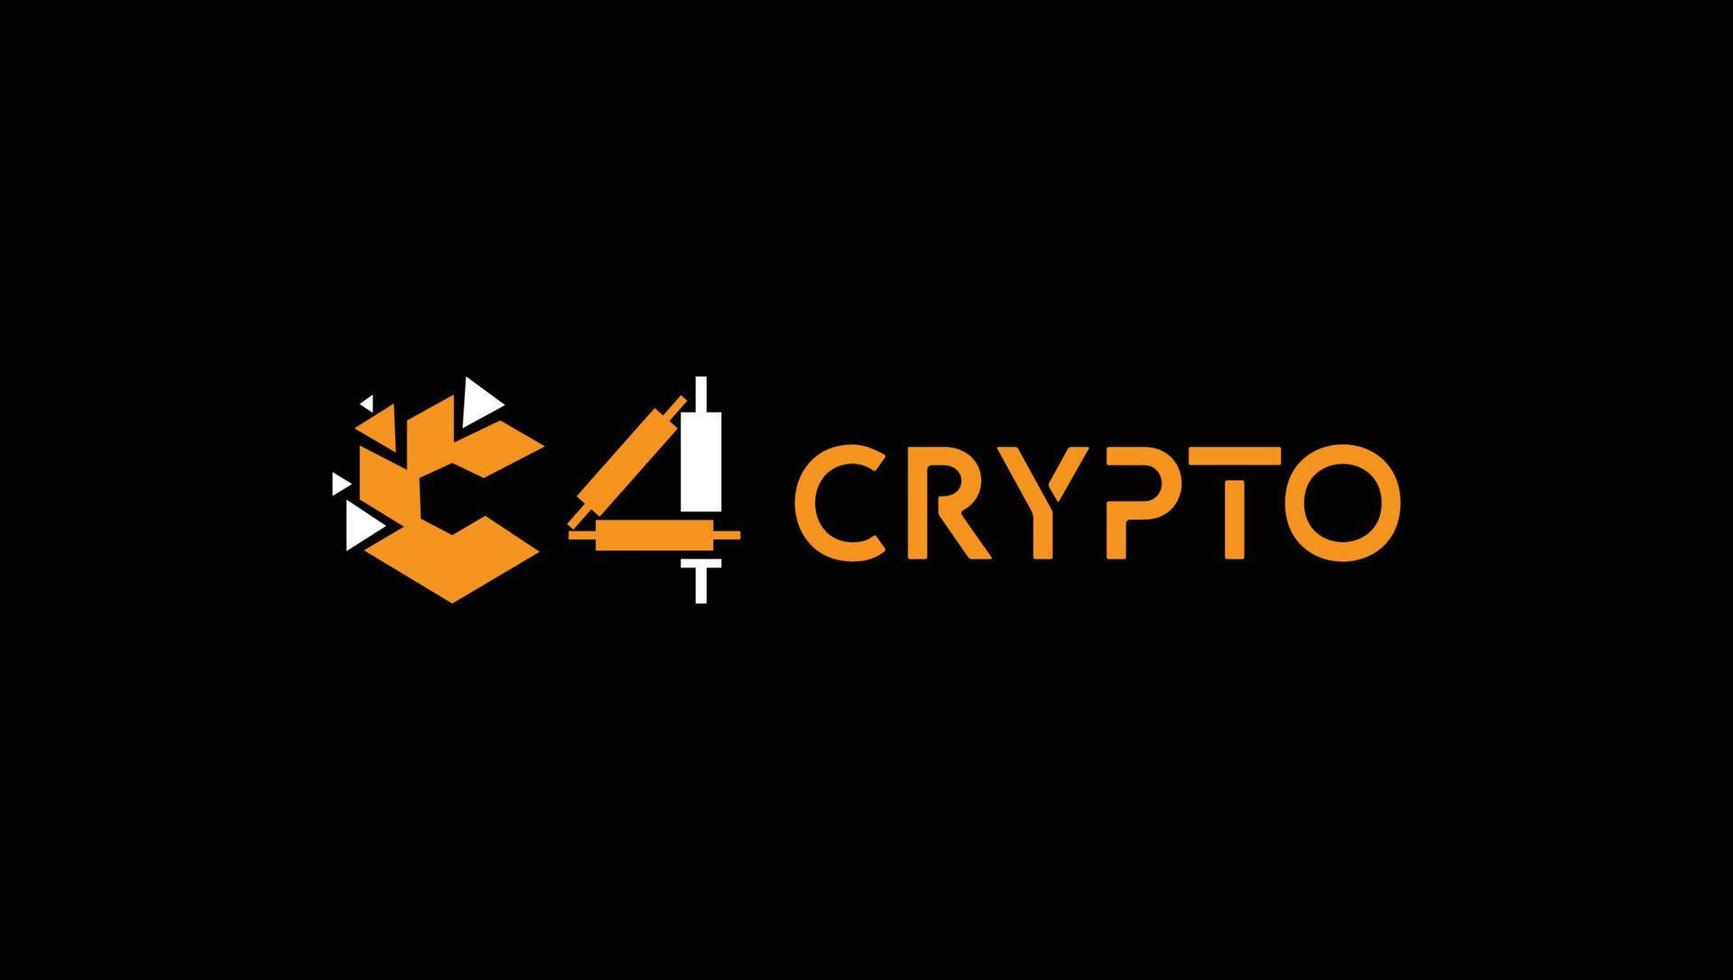 c4 crypto project